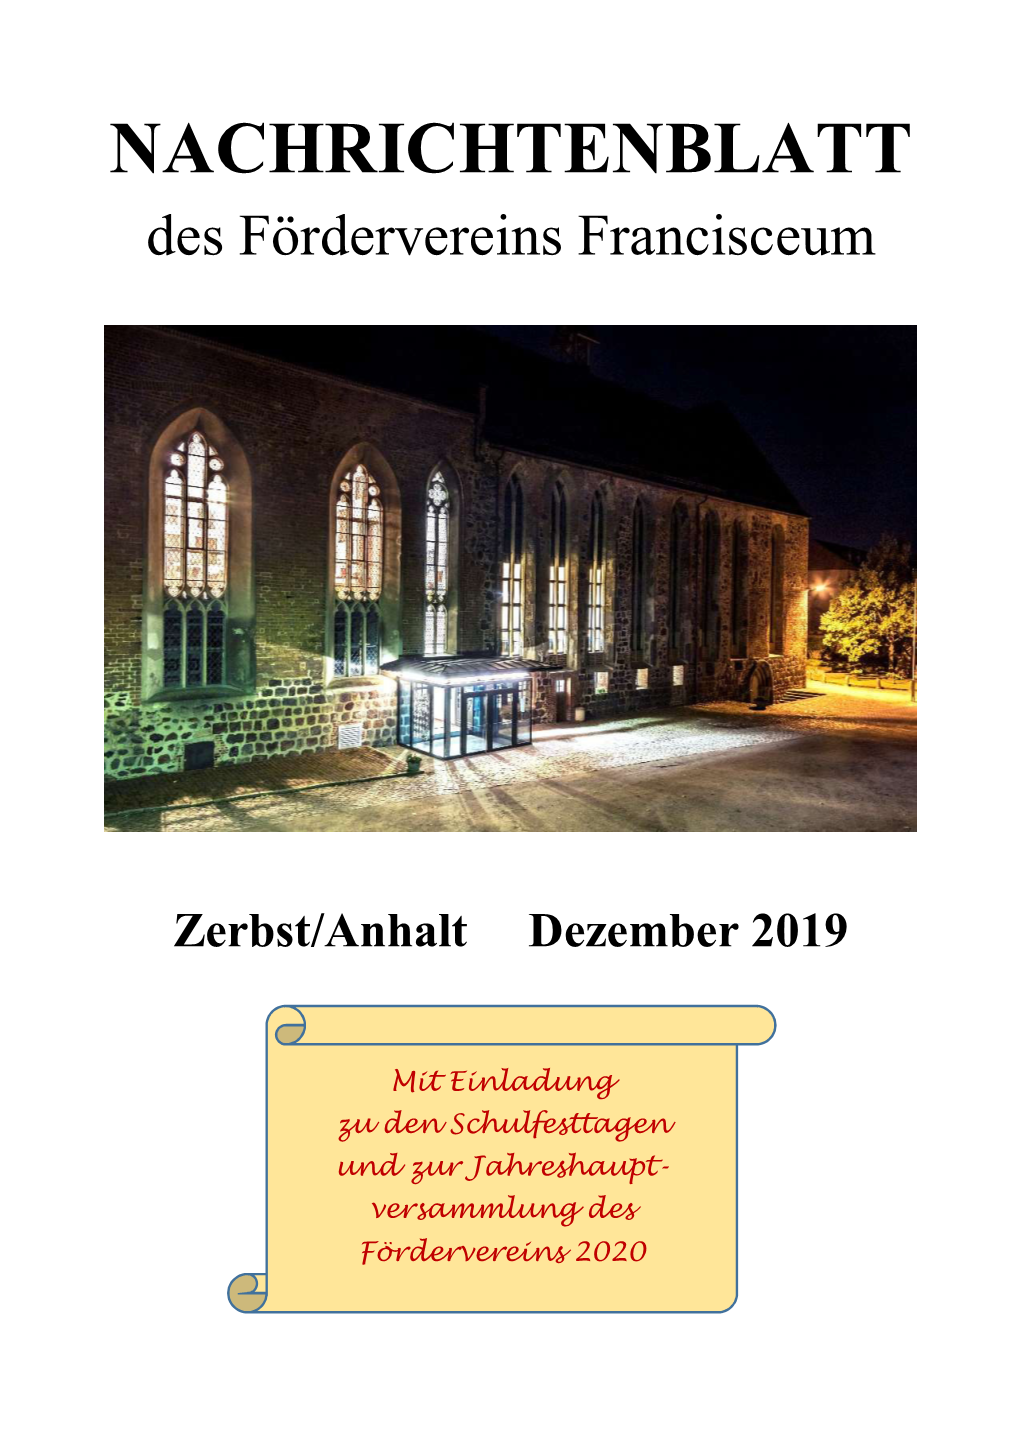 Zerbst/Anhalt Dezember 2019